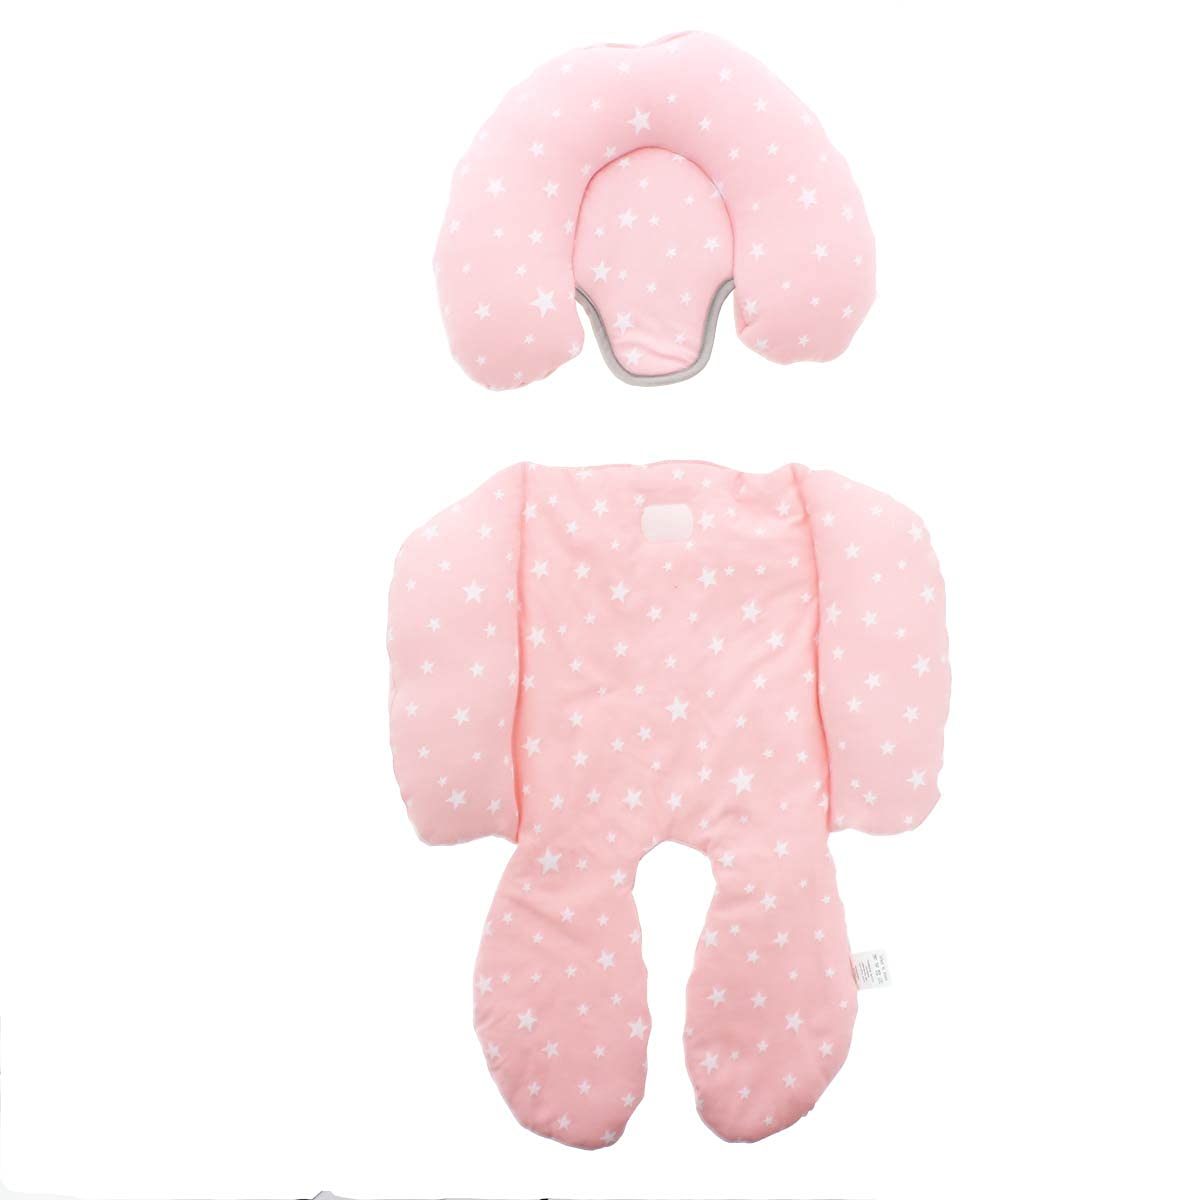 BEYBI® Baby Car Seat Reducer Cotton Car Seat Group 0 Pram and Cot Bed (Pink, White Star)